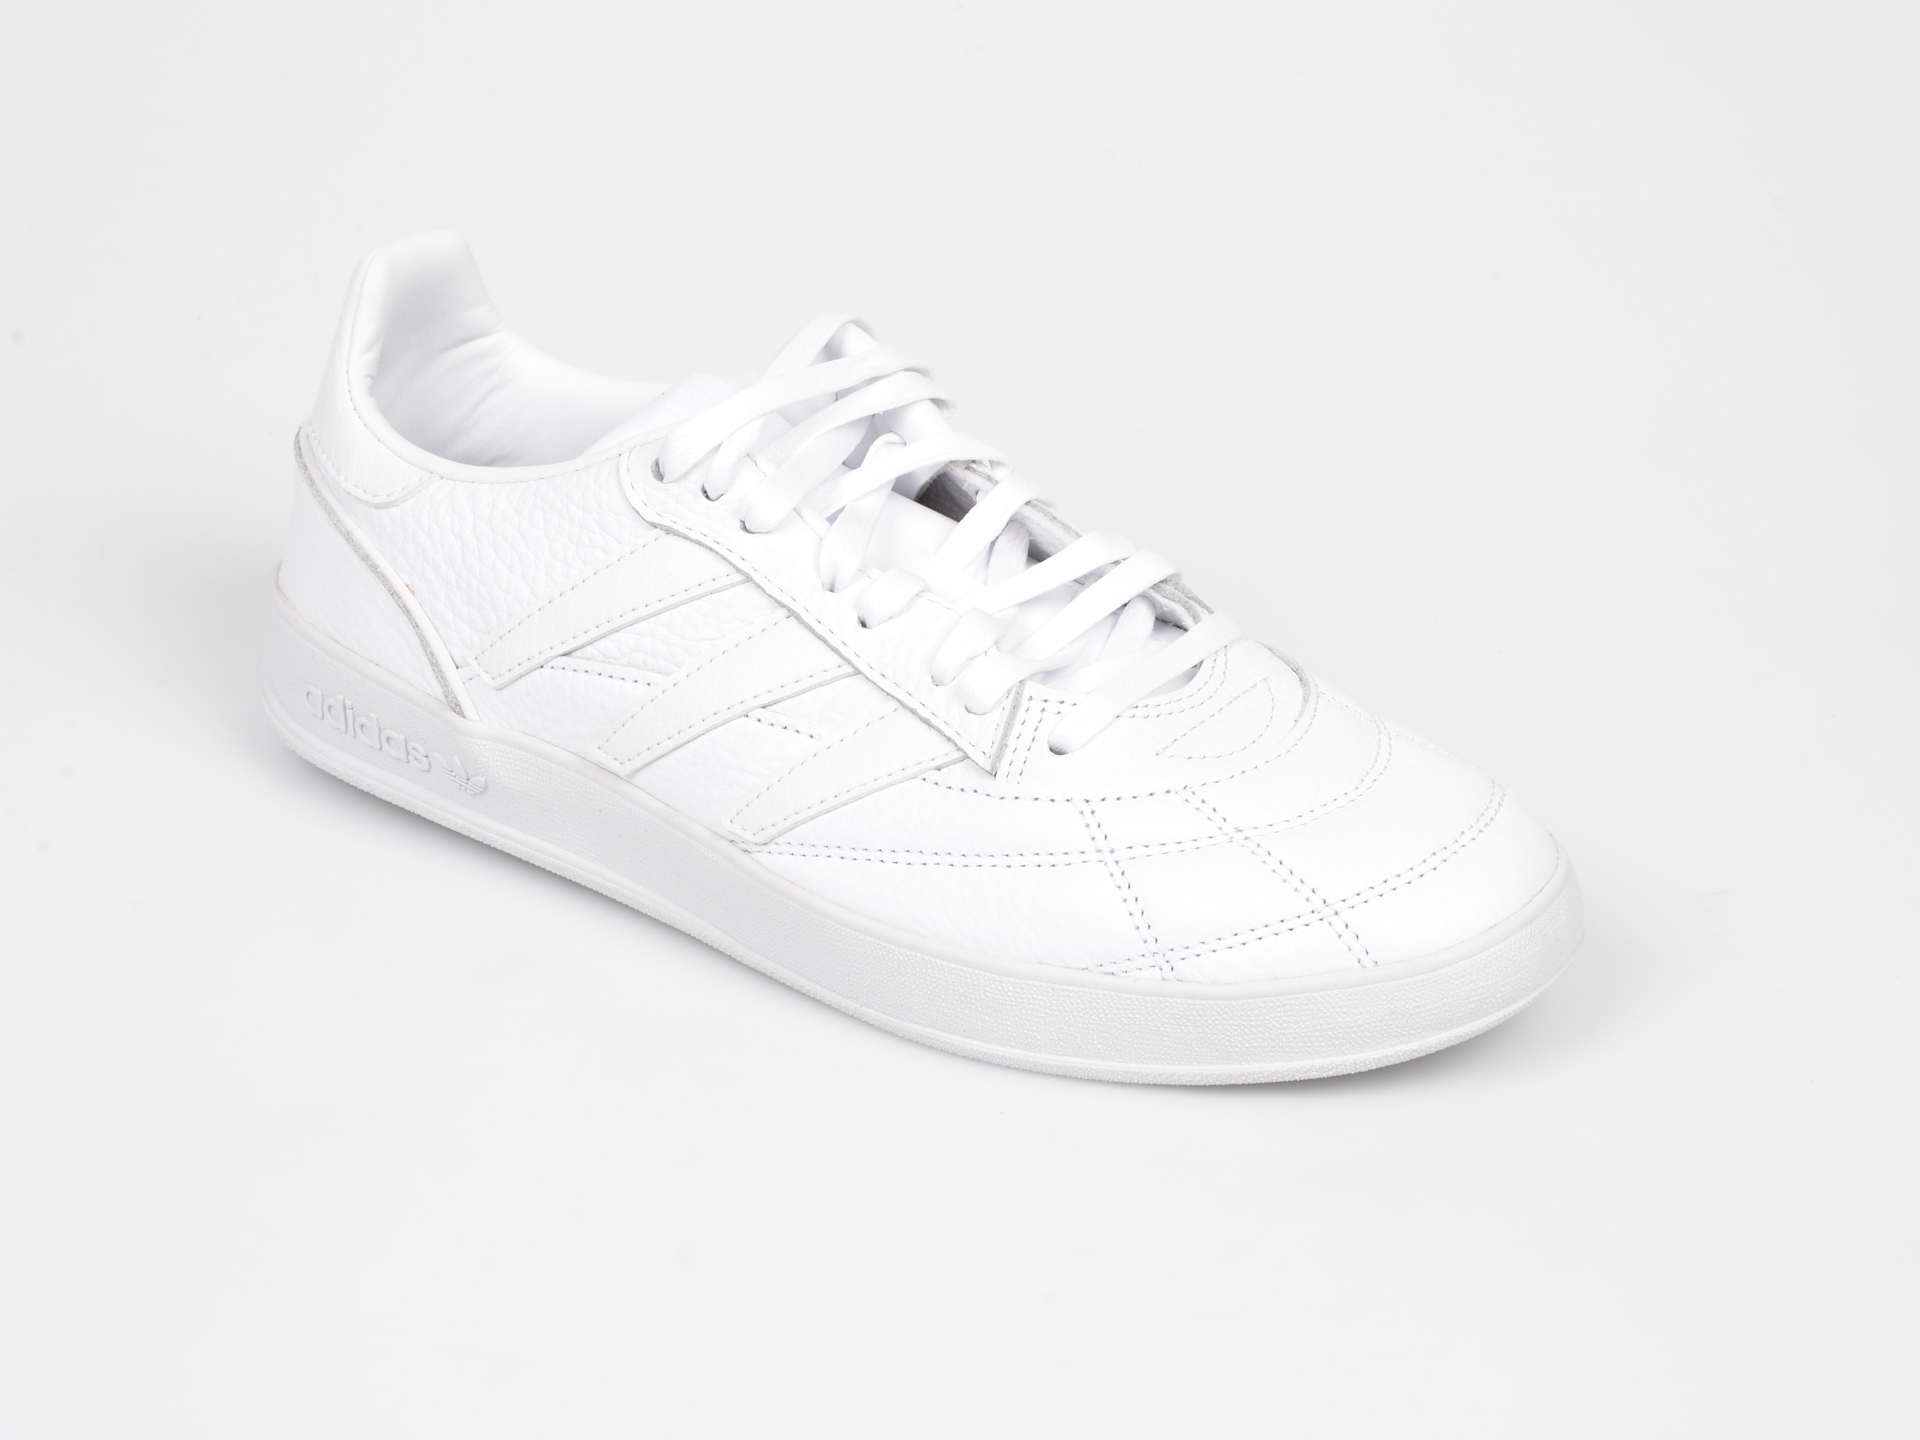 Pantofi sport ADIDAS albi, Ee6318, din piele naturala